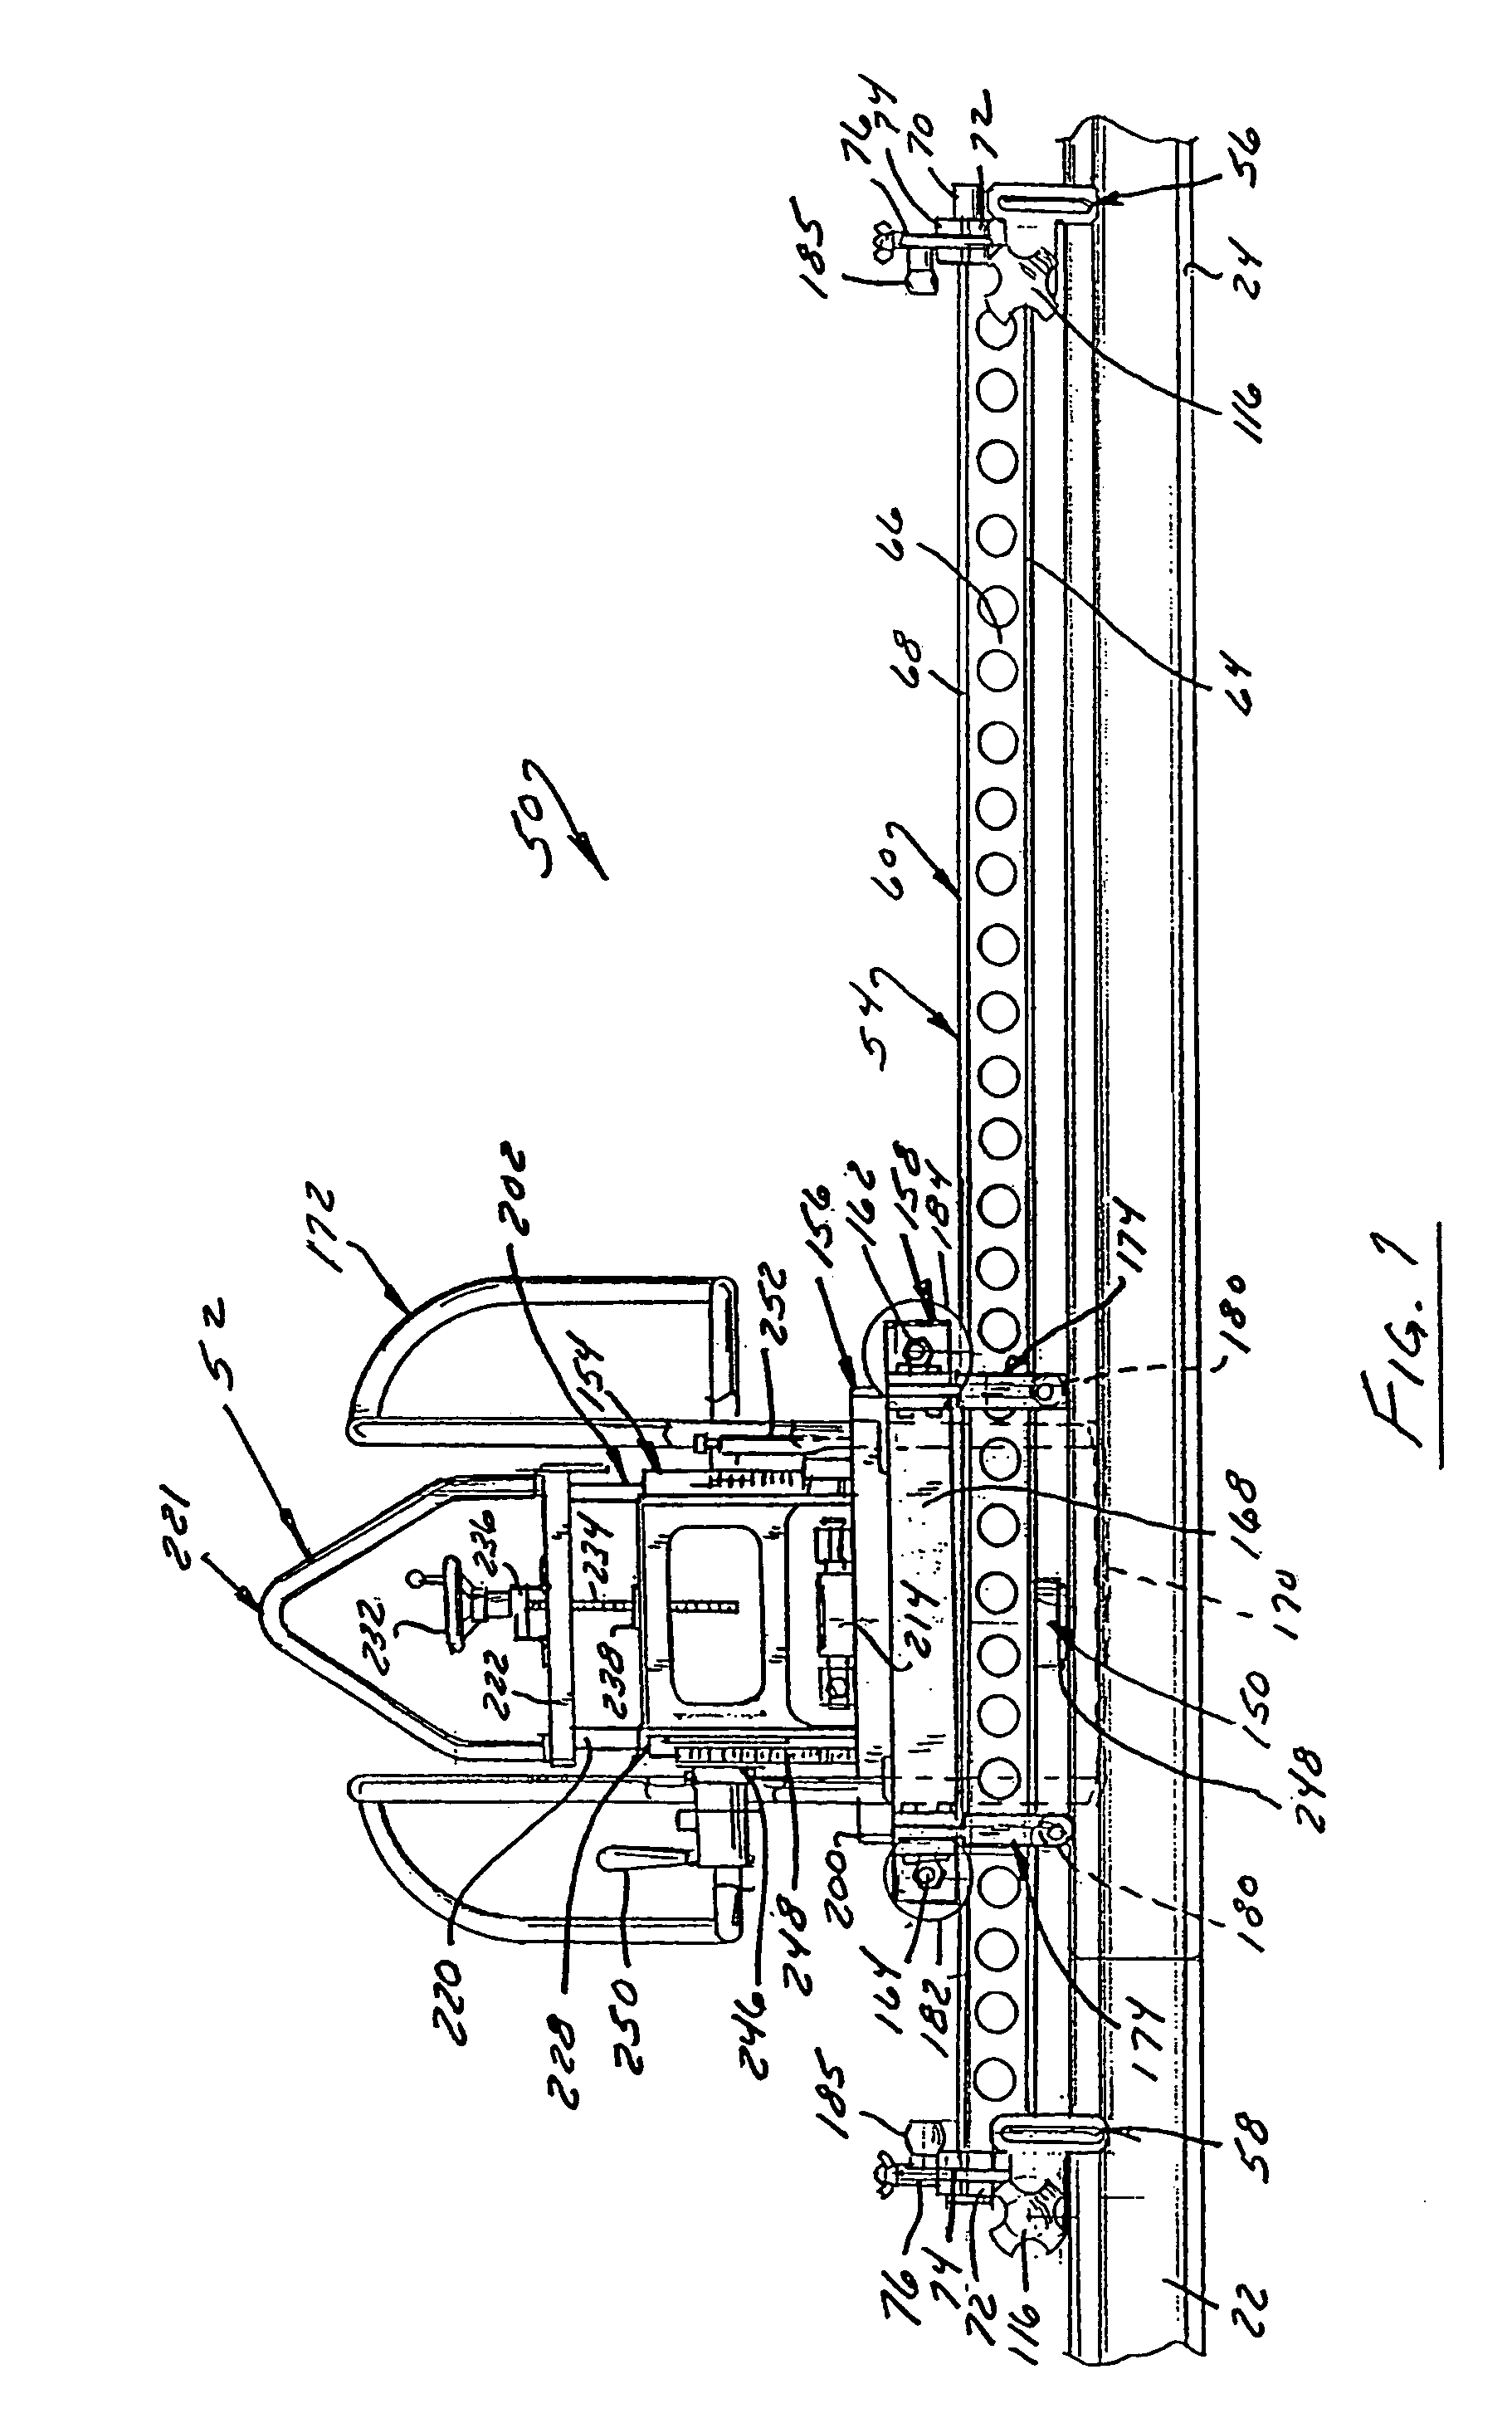 Railway grinder